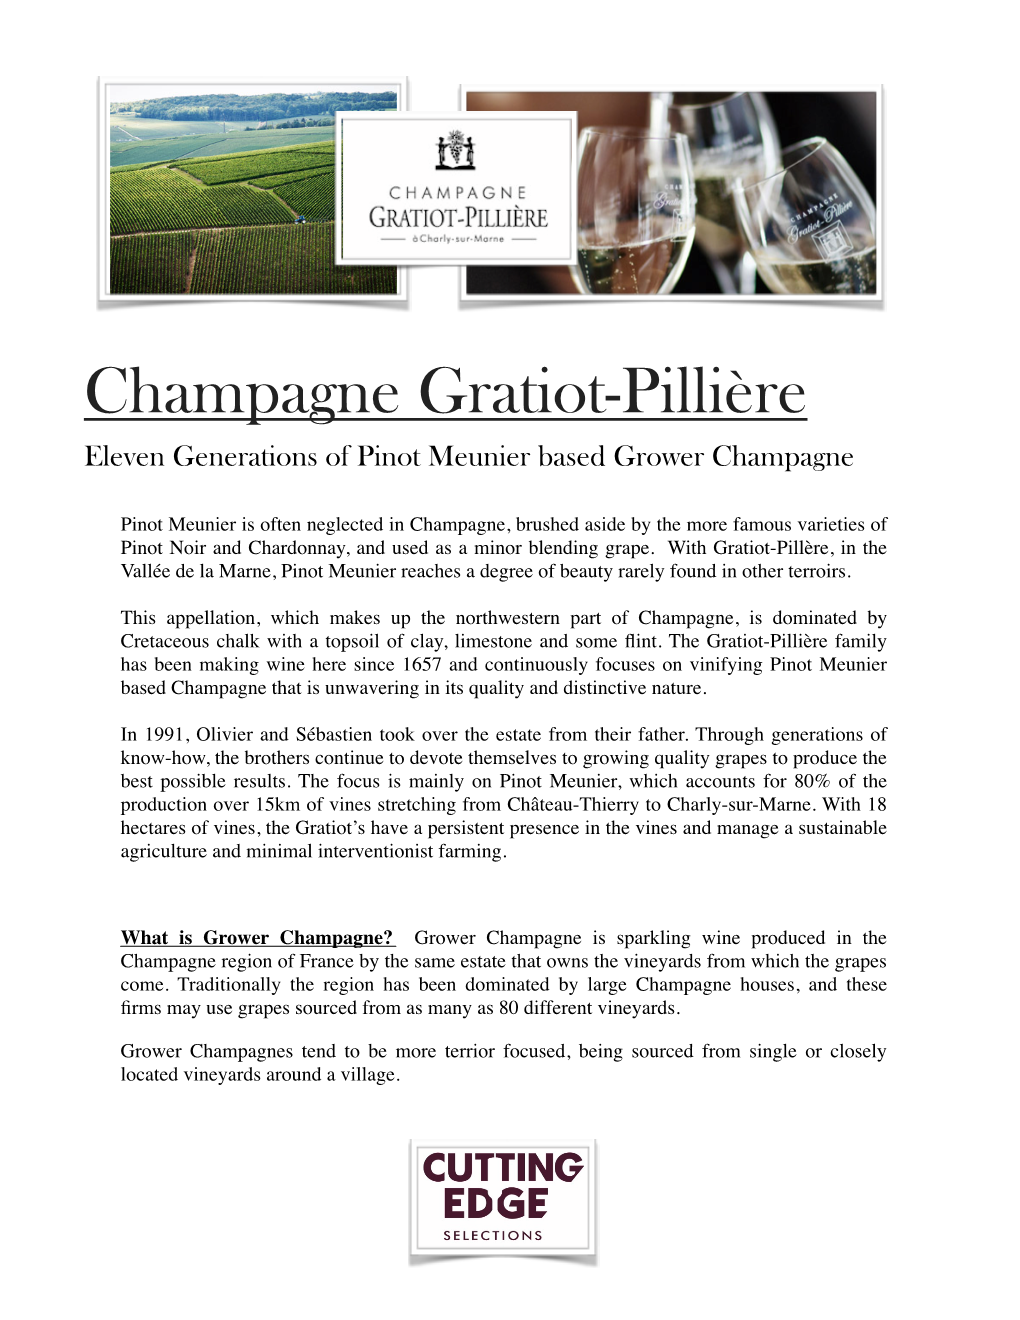 Gratiot-Pilliere Champagne Brand Sheet